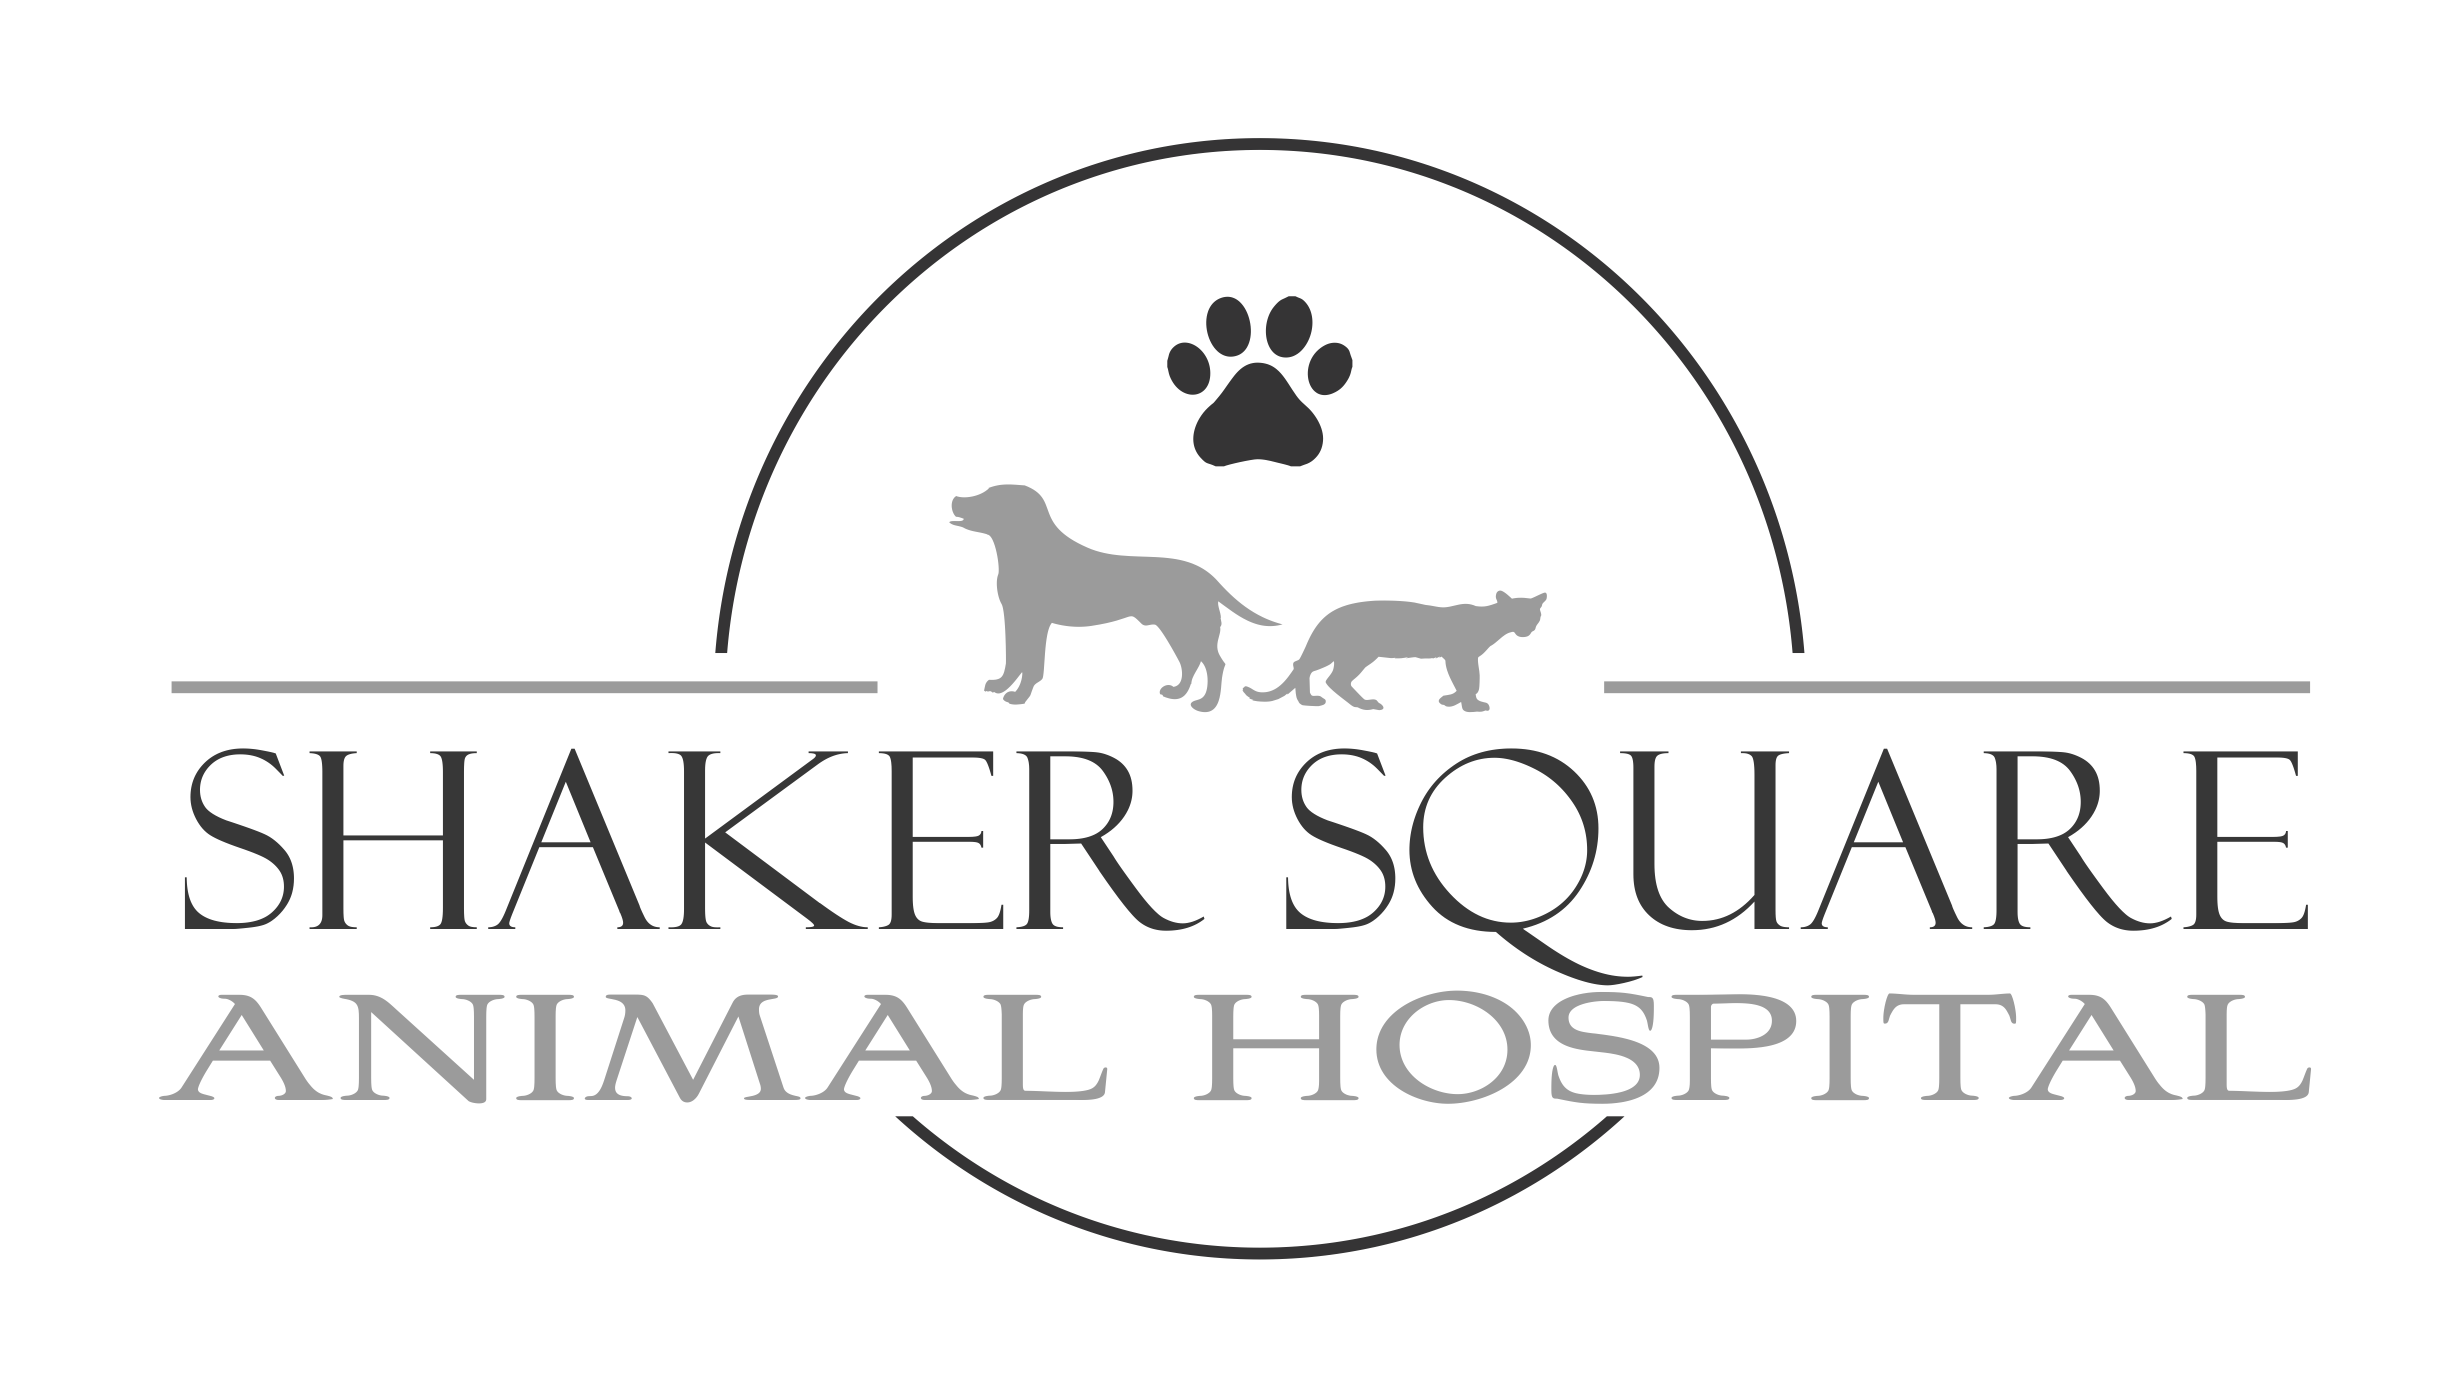 Shaker Square Animal Hospital